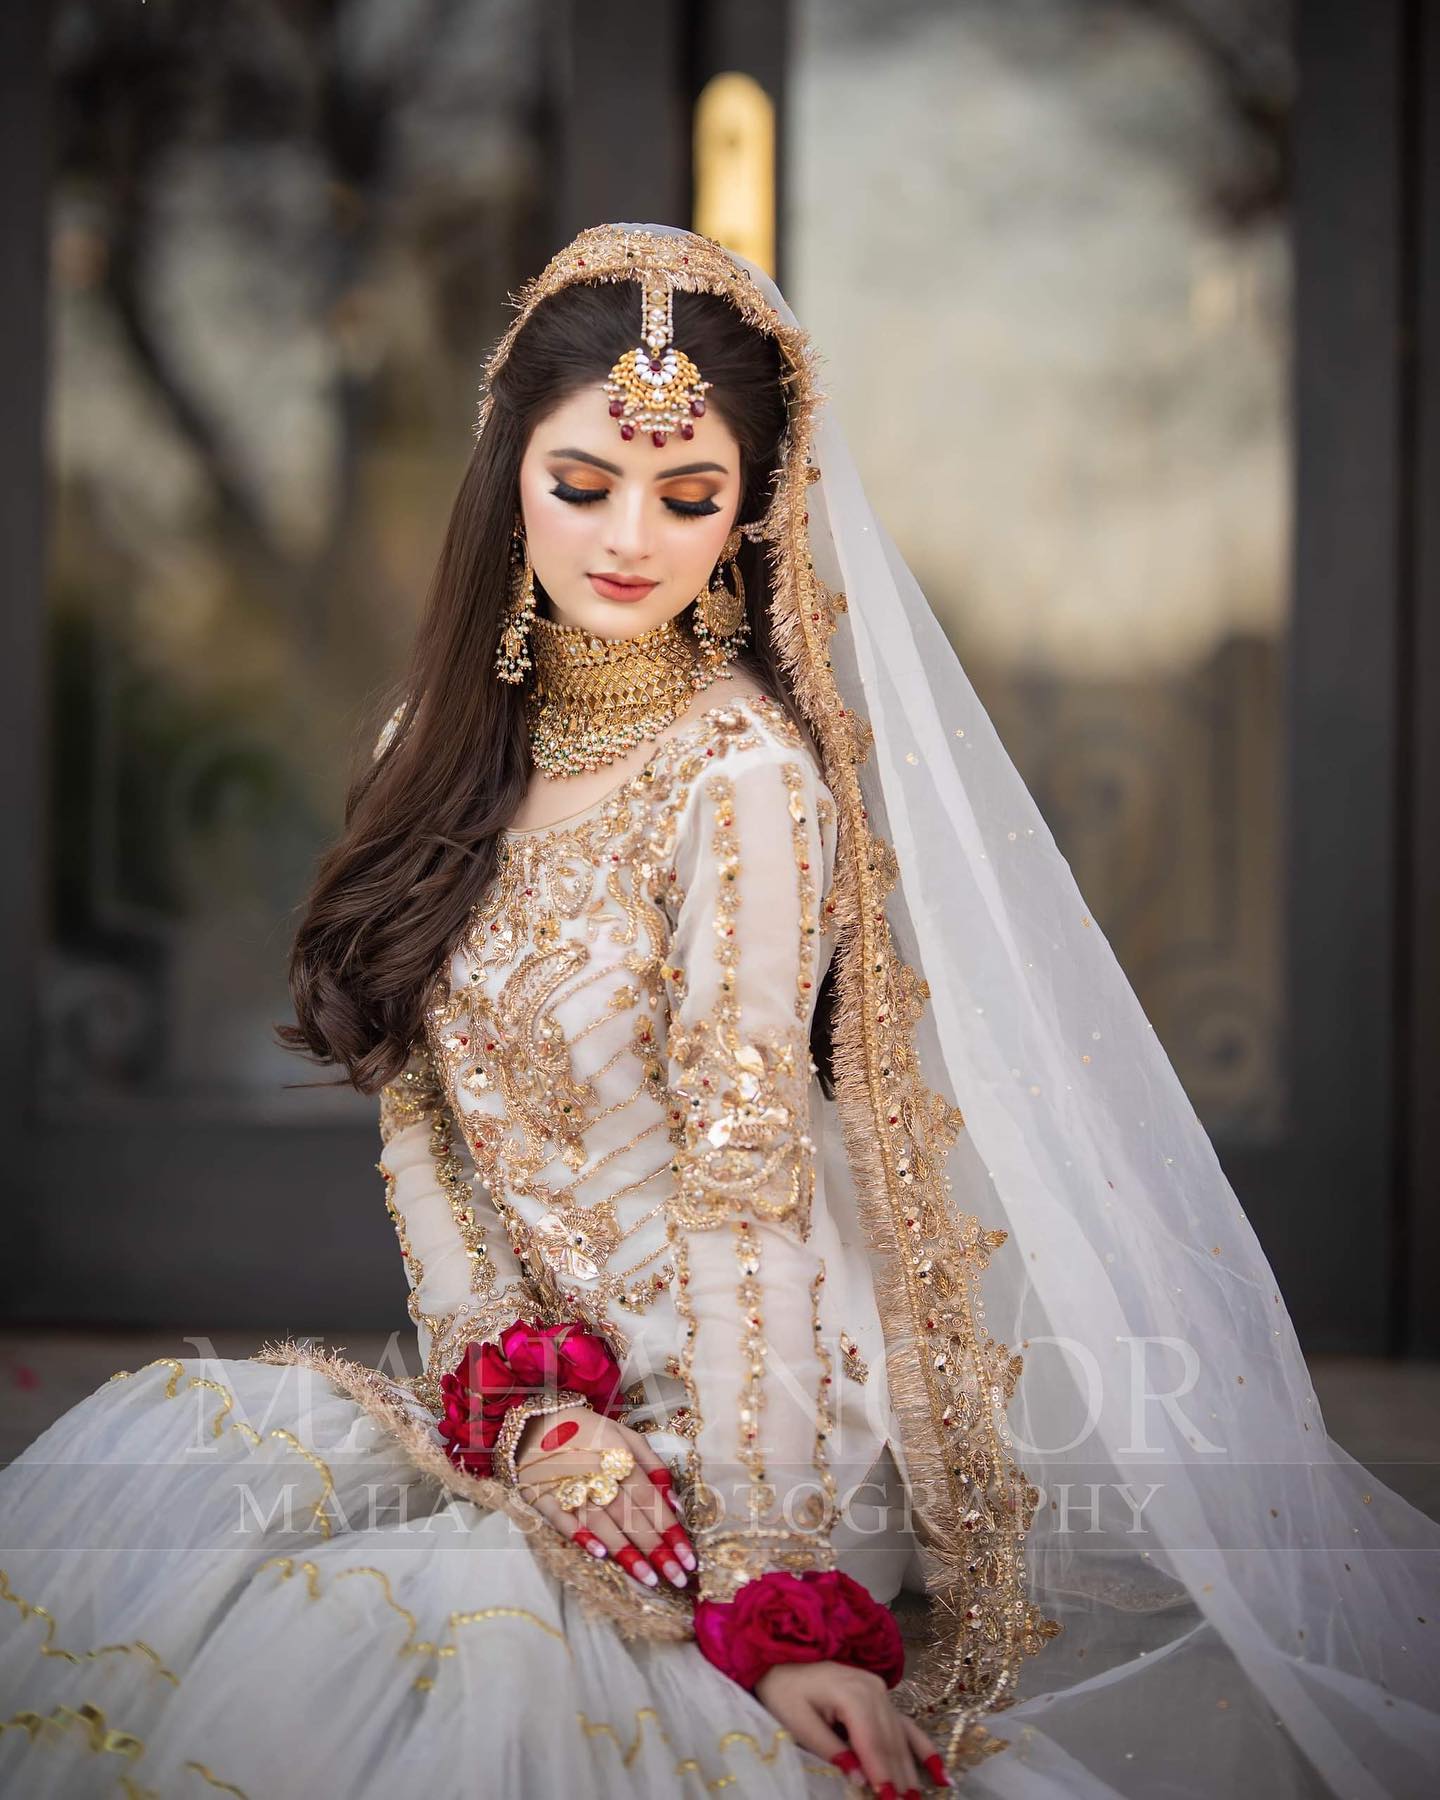 Pakistan's Best Candid Wedding Photograph - ShadiGrapher